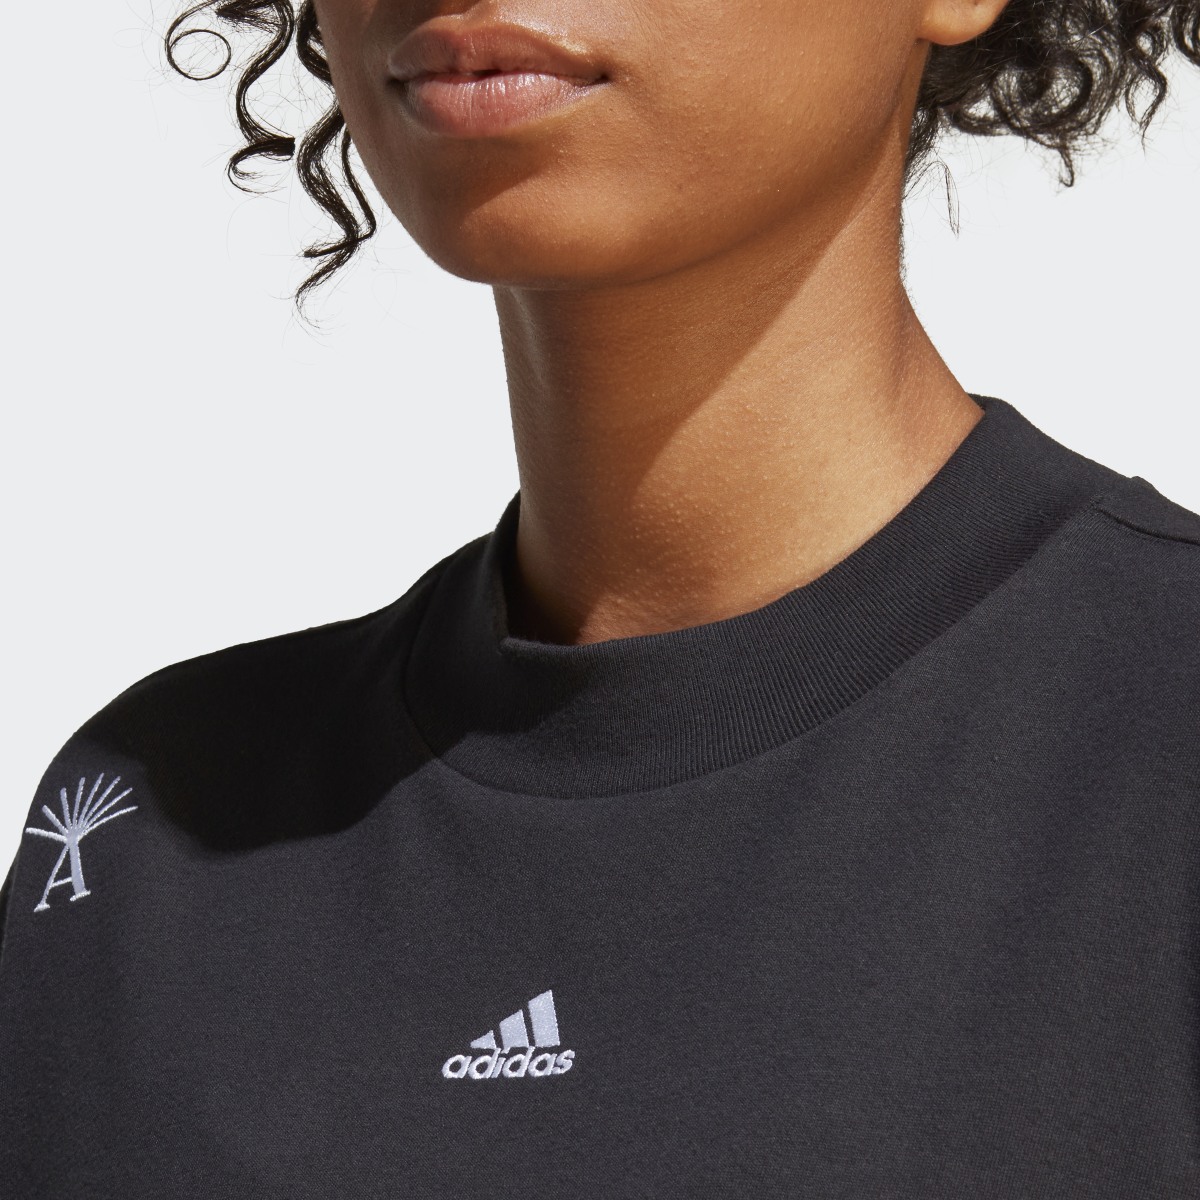 Adidas Camiseta Boyfriend Healing Crystals Inspired Graphics. 7